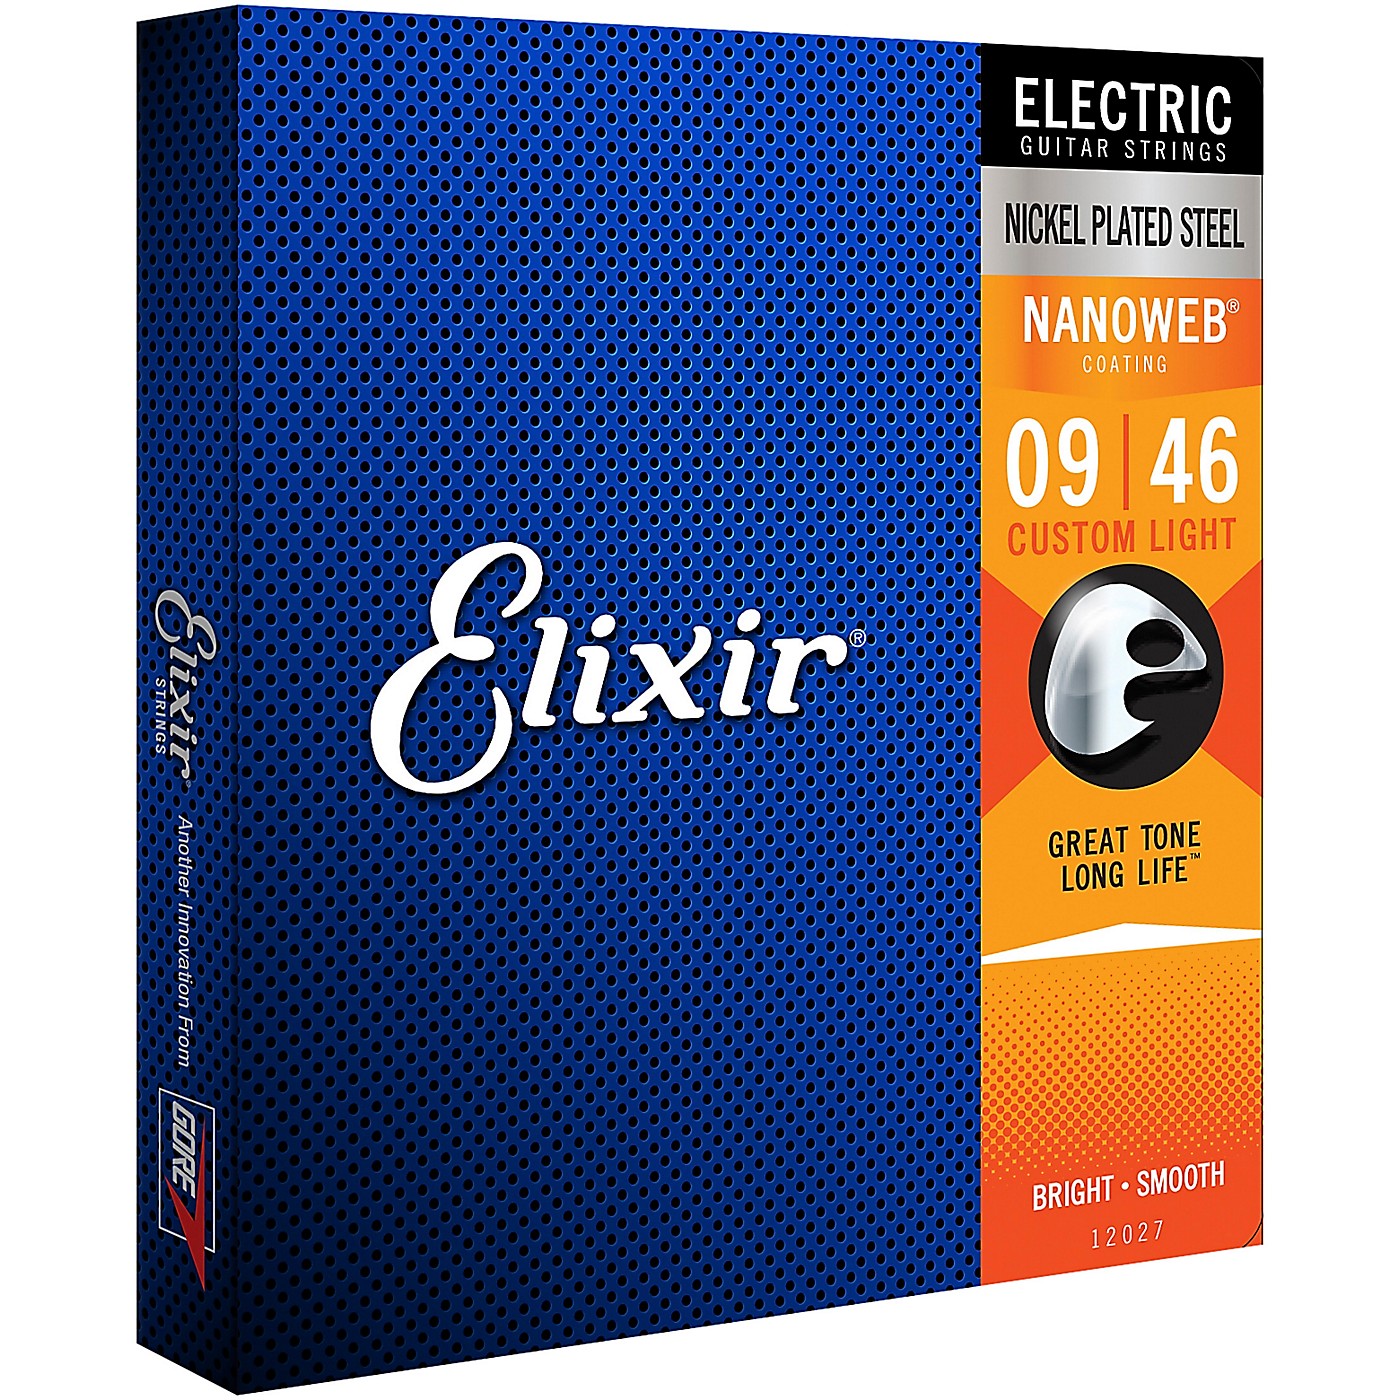 Elixir Electric Guitar Strings with NANOWEB Coating, Custom Light (.009-.046) thumbnail